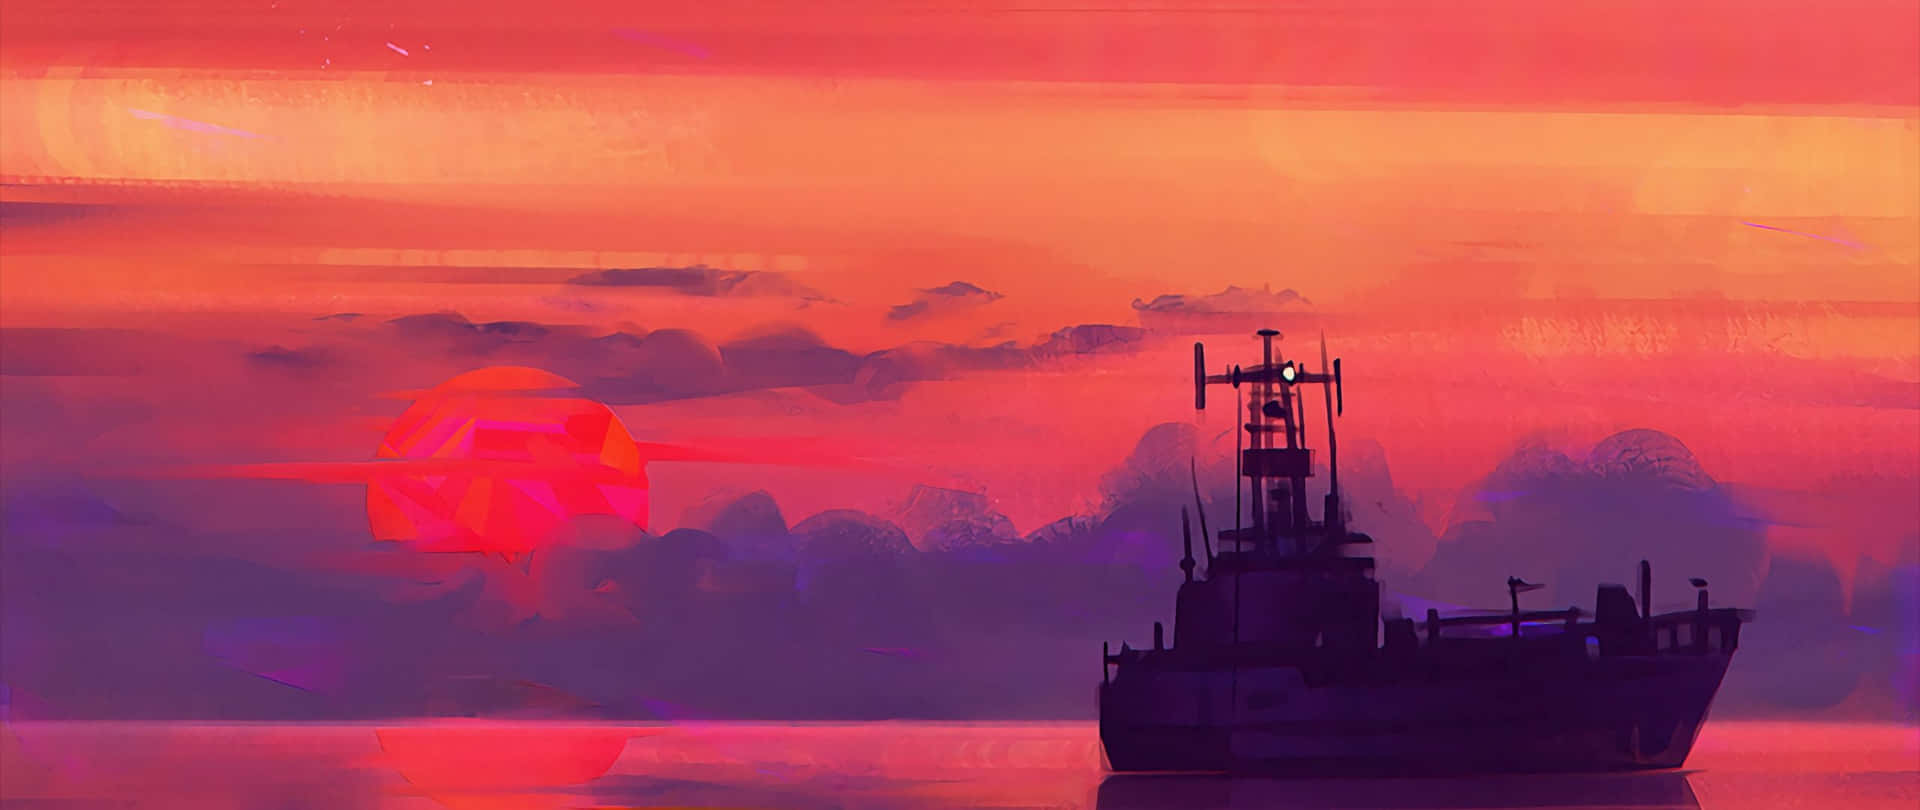 Båd under solnedgang kunst 2560x1080 Wallpaper